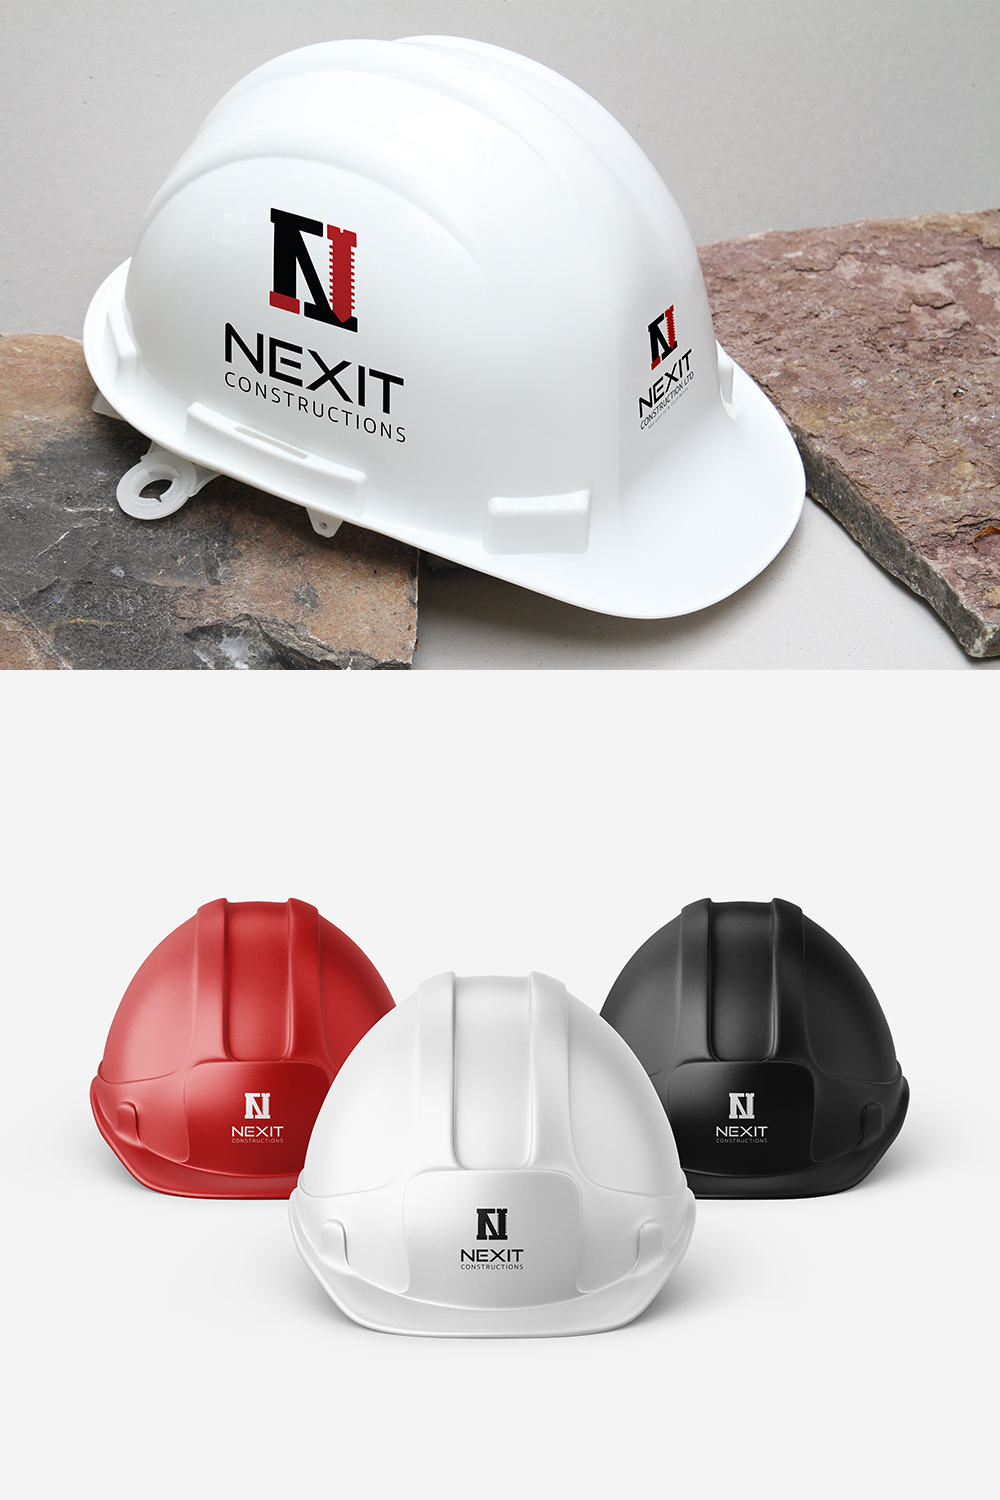 Nexit Constructions Logo Pinterest collage image.